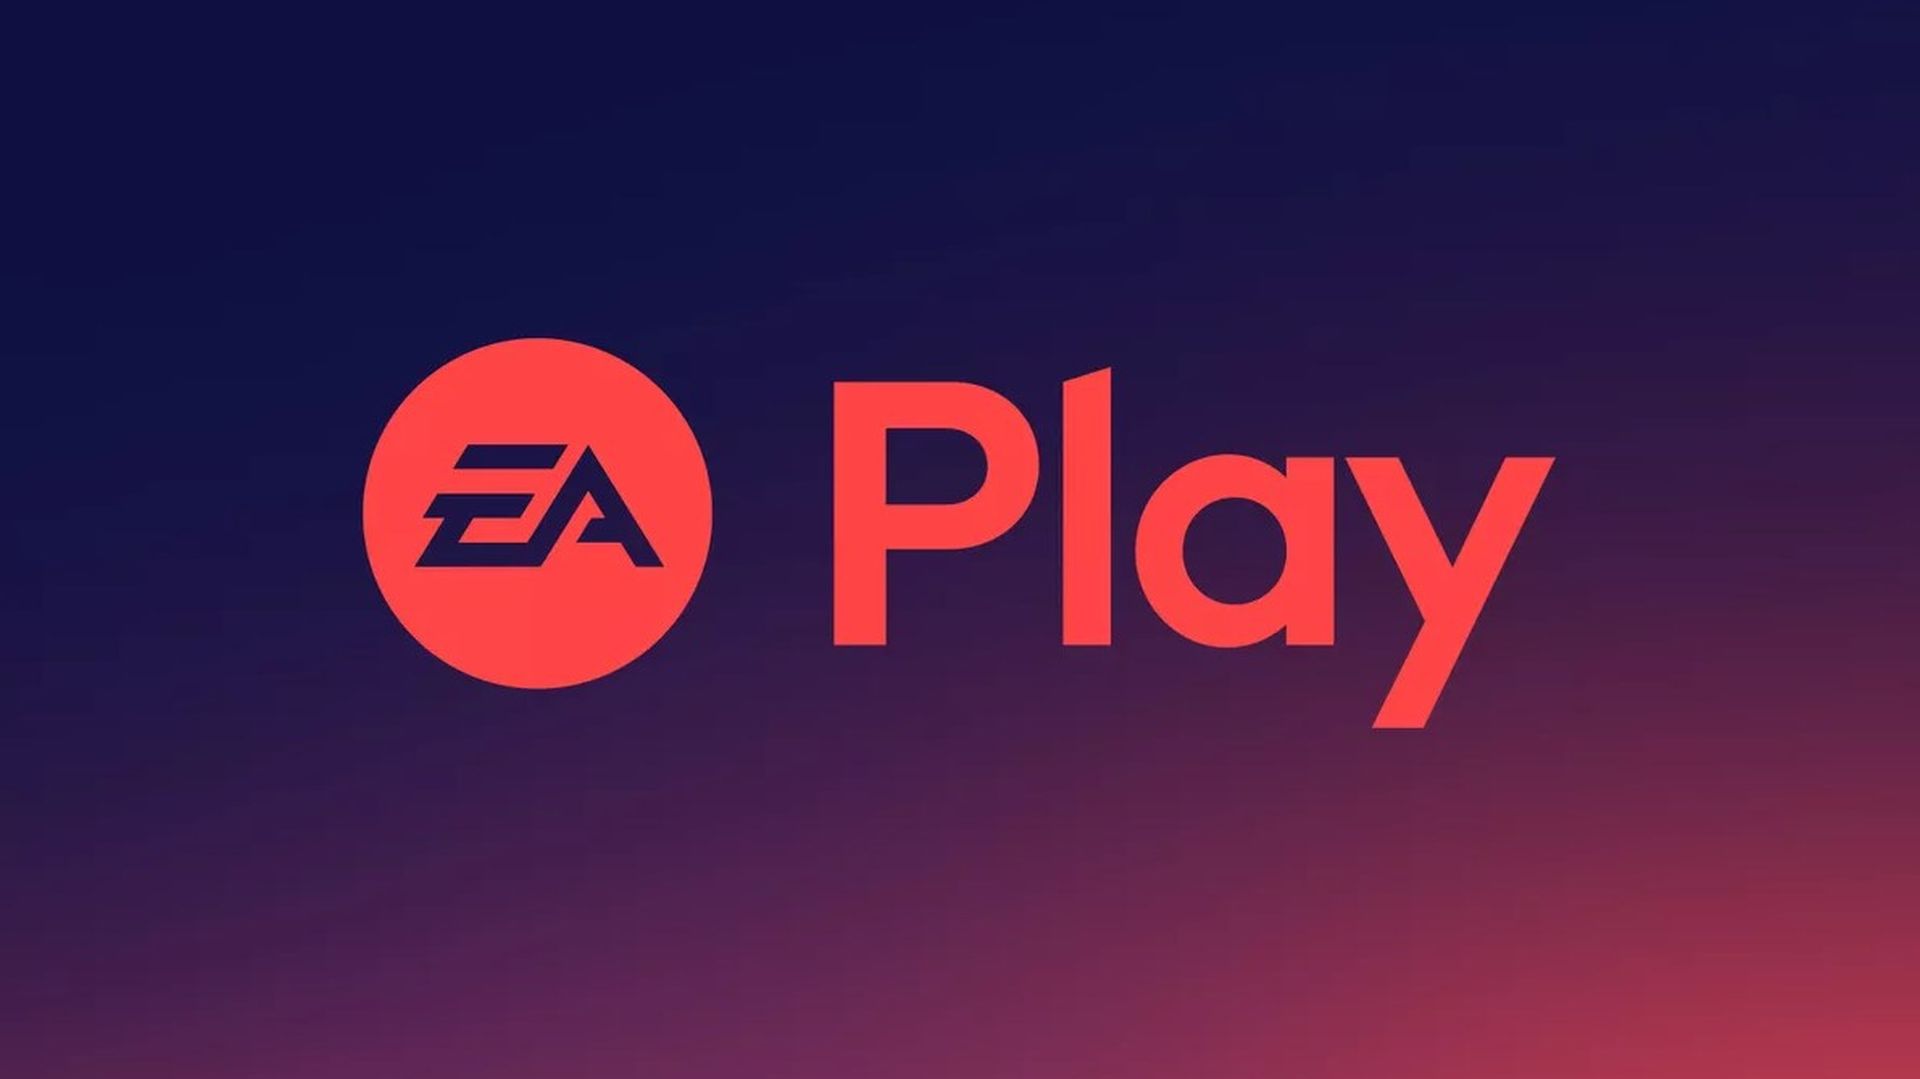 Ea Play je sada dostupan direktno na Steamu